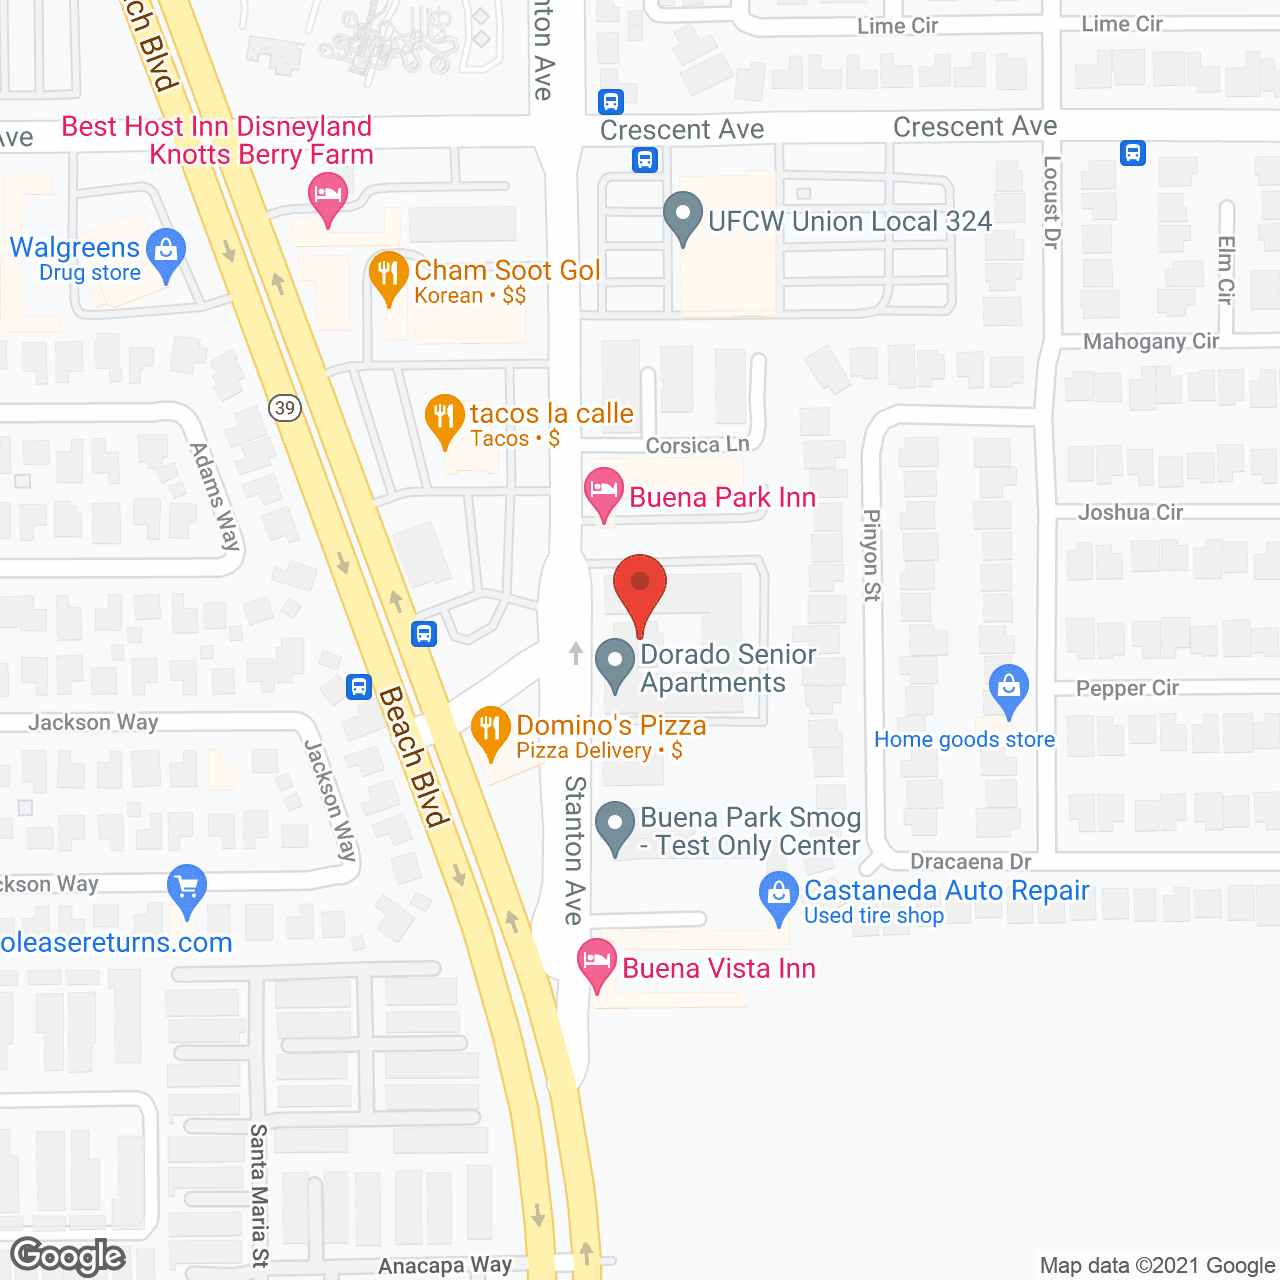 Dorado Senior Apartments in google map